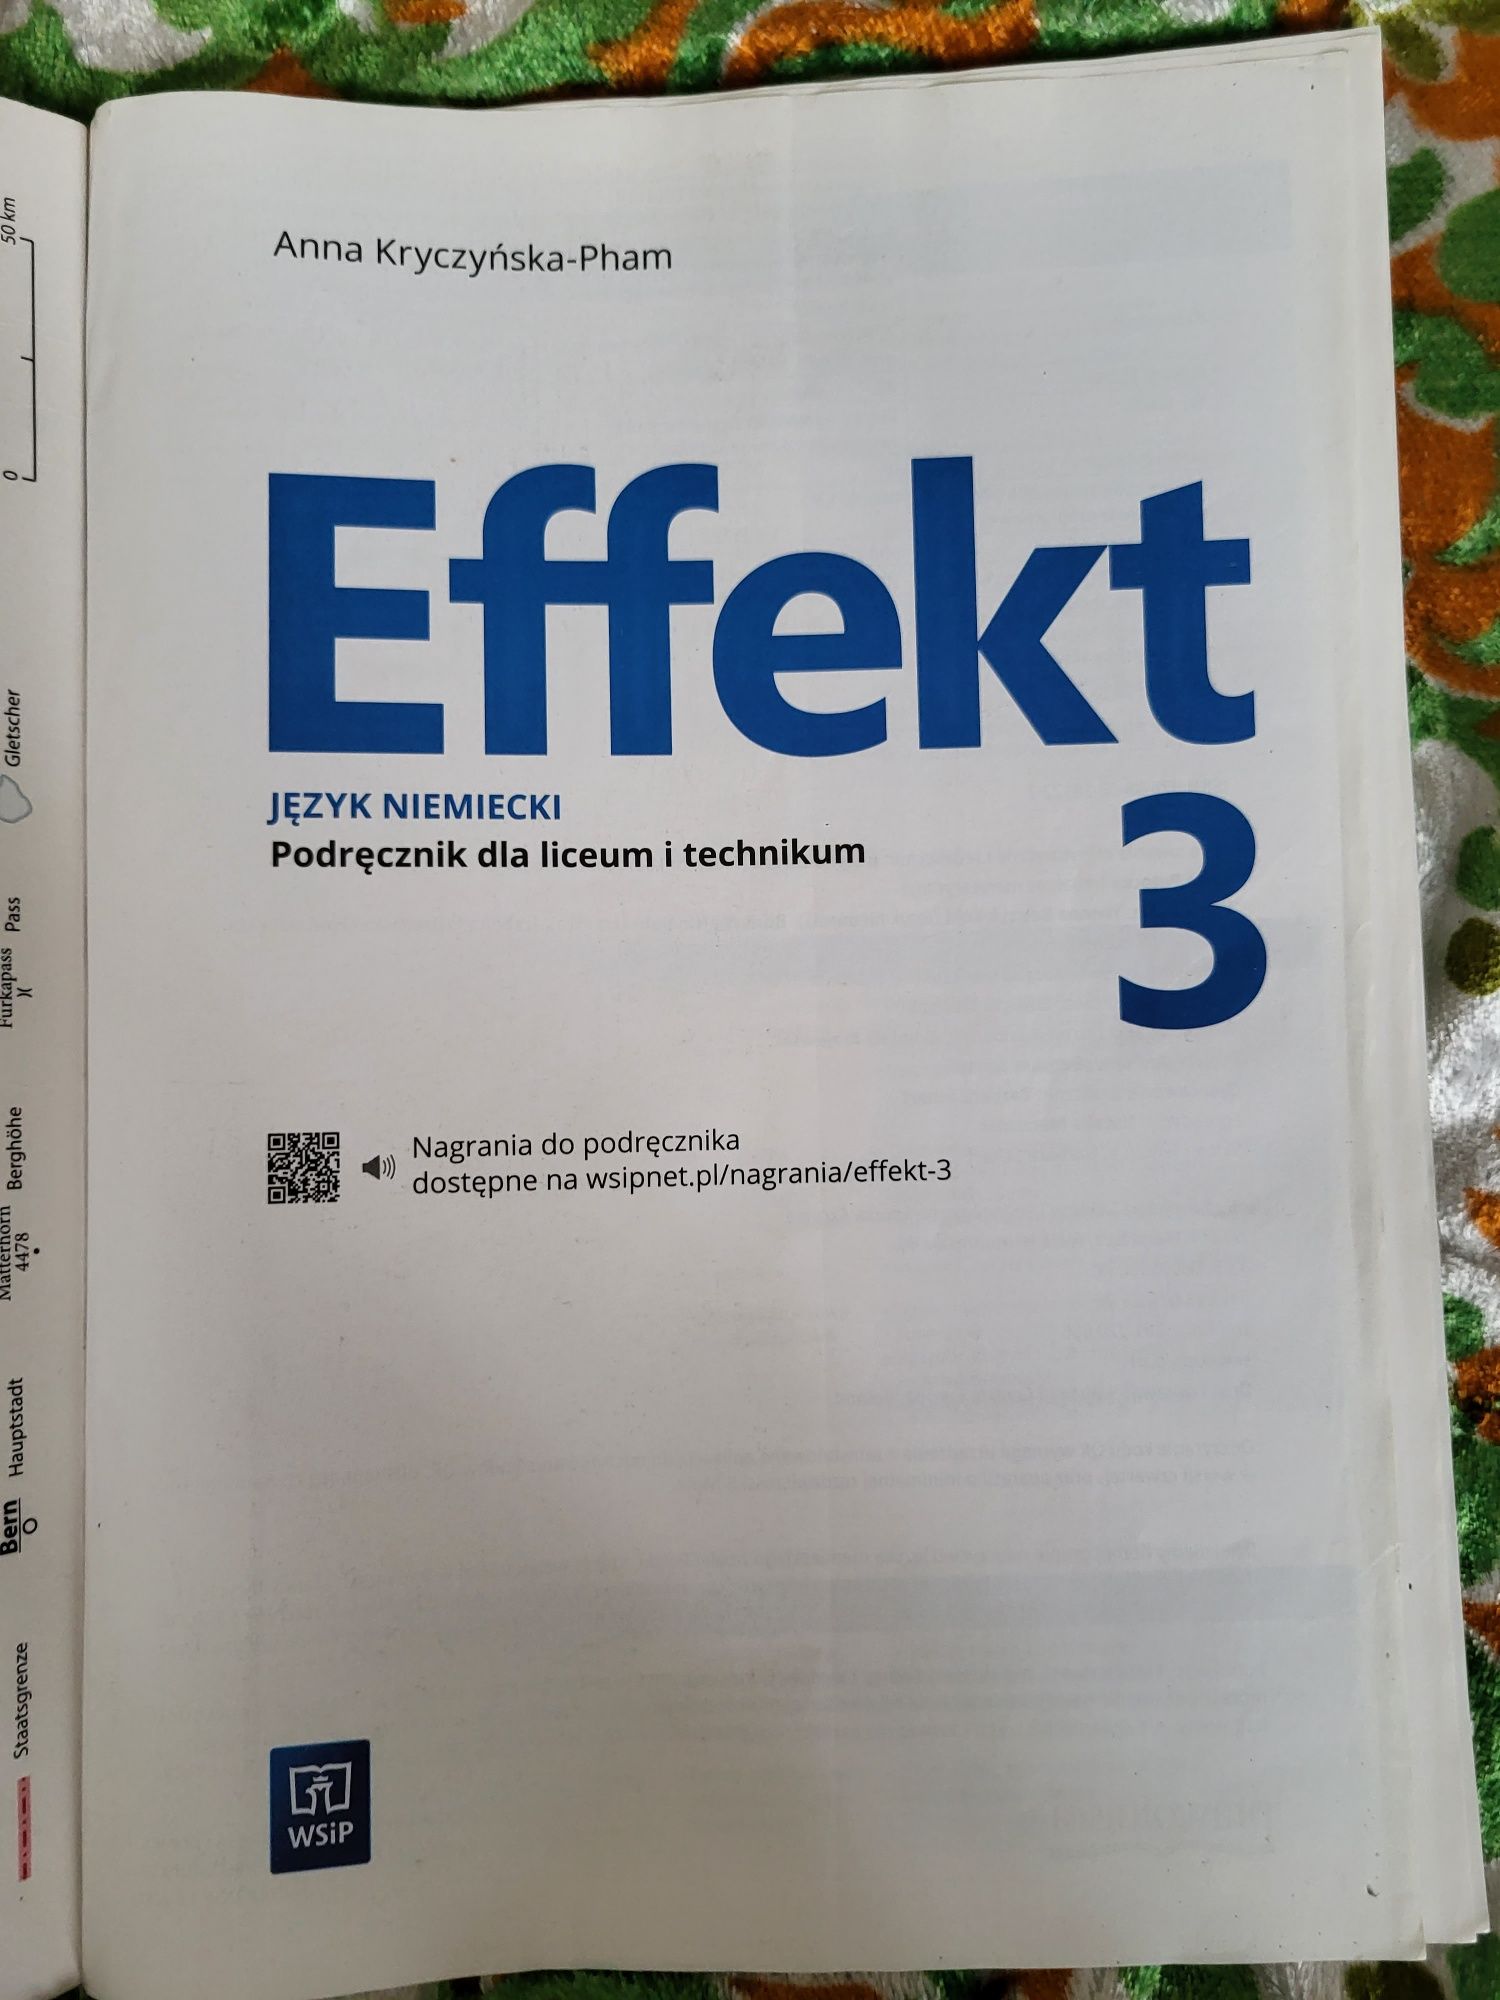 Podręcznik książka Effekt 3 j.niemiecki technikum liceum